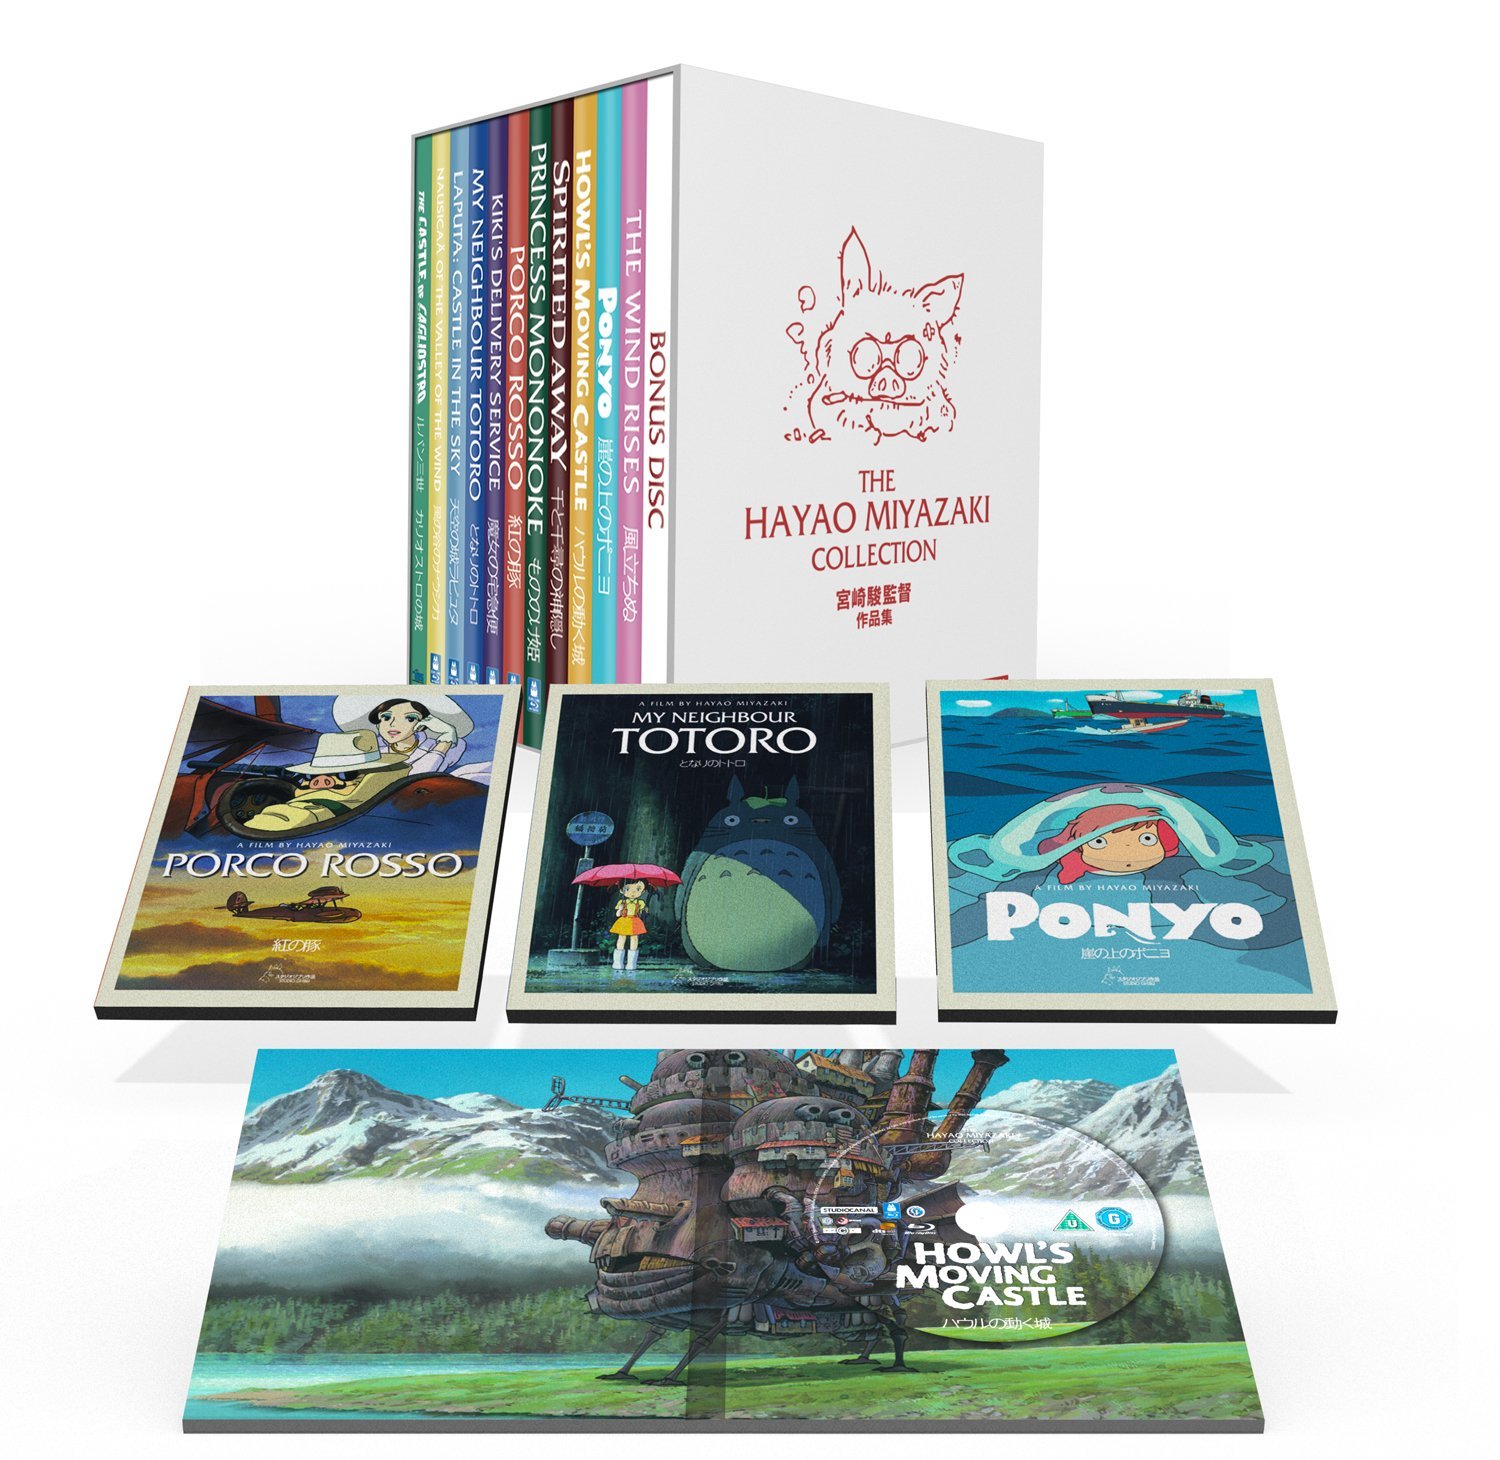 The Hayao Miyazaki Collection - Studio Ghibli (Blu-ray Boxset) [UK]